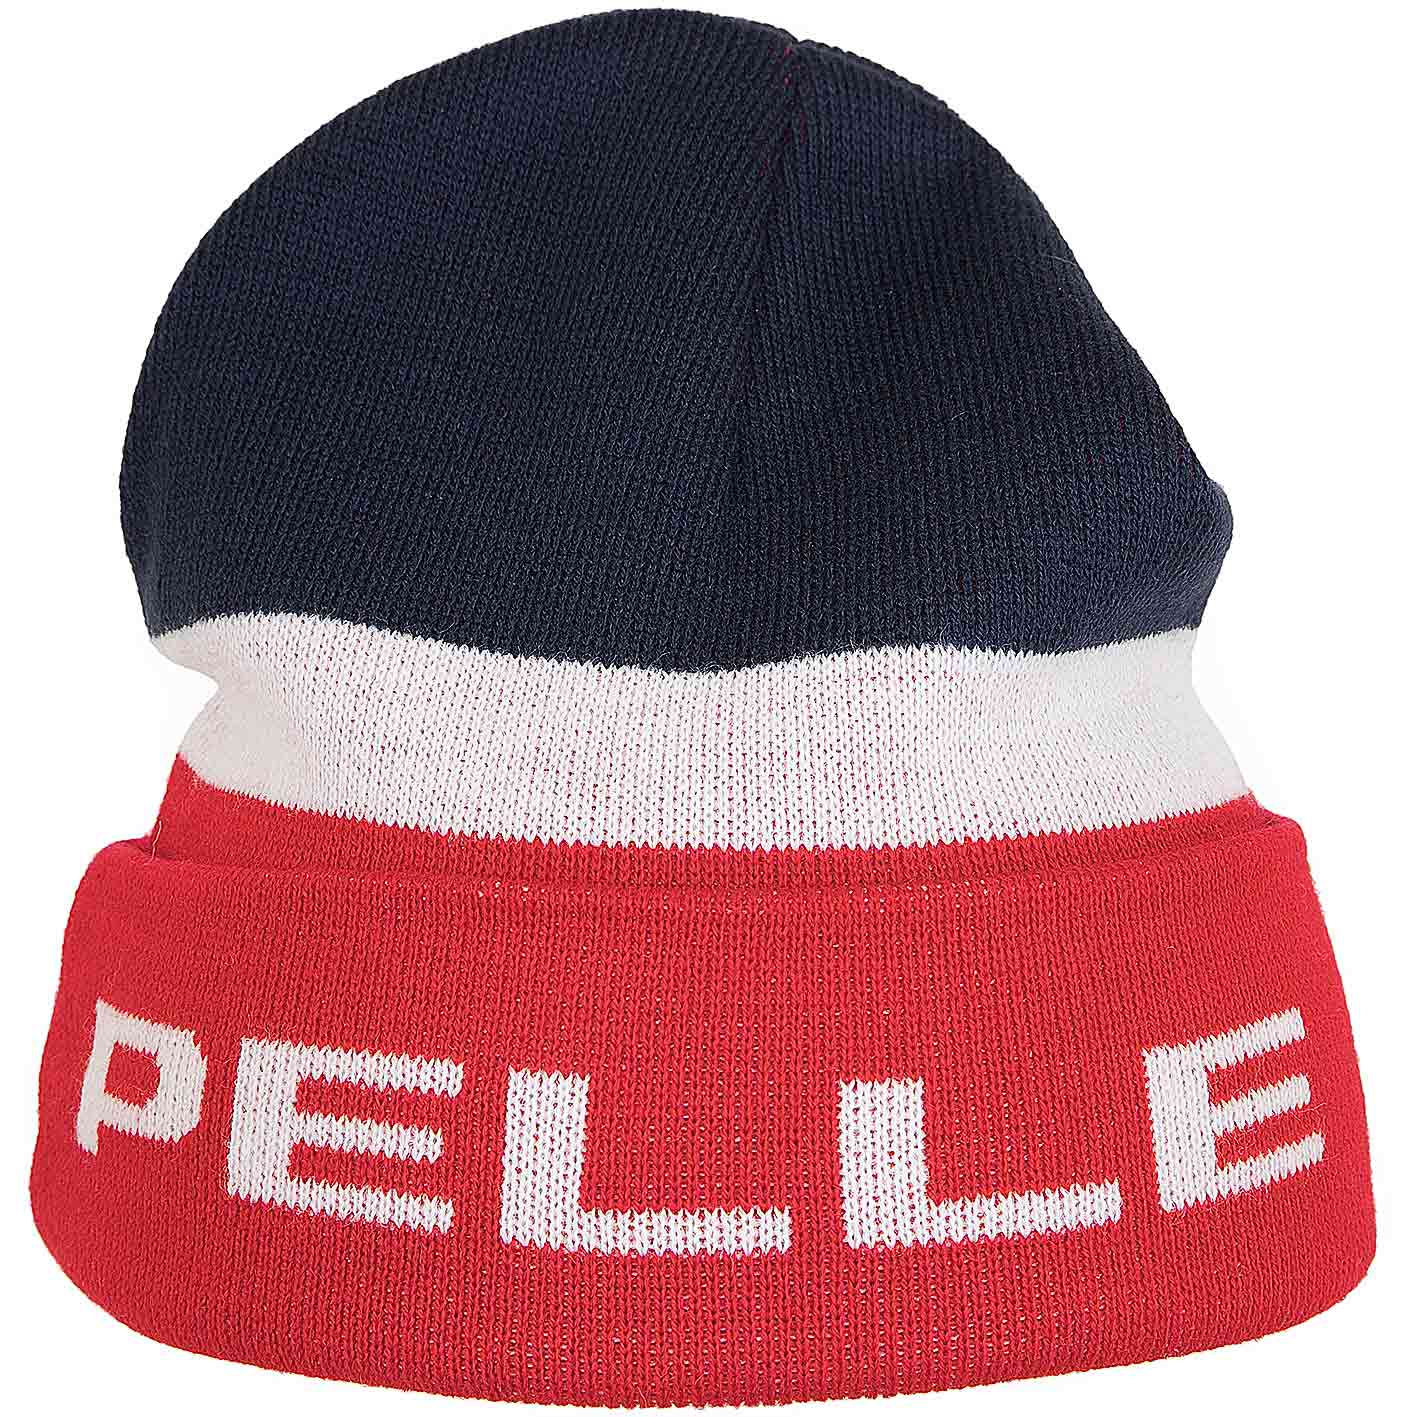 ☆ Pelle Pelle Beanie Linear dunkelblau/rot - hier bestellen!